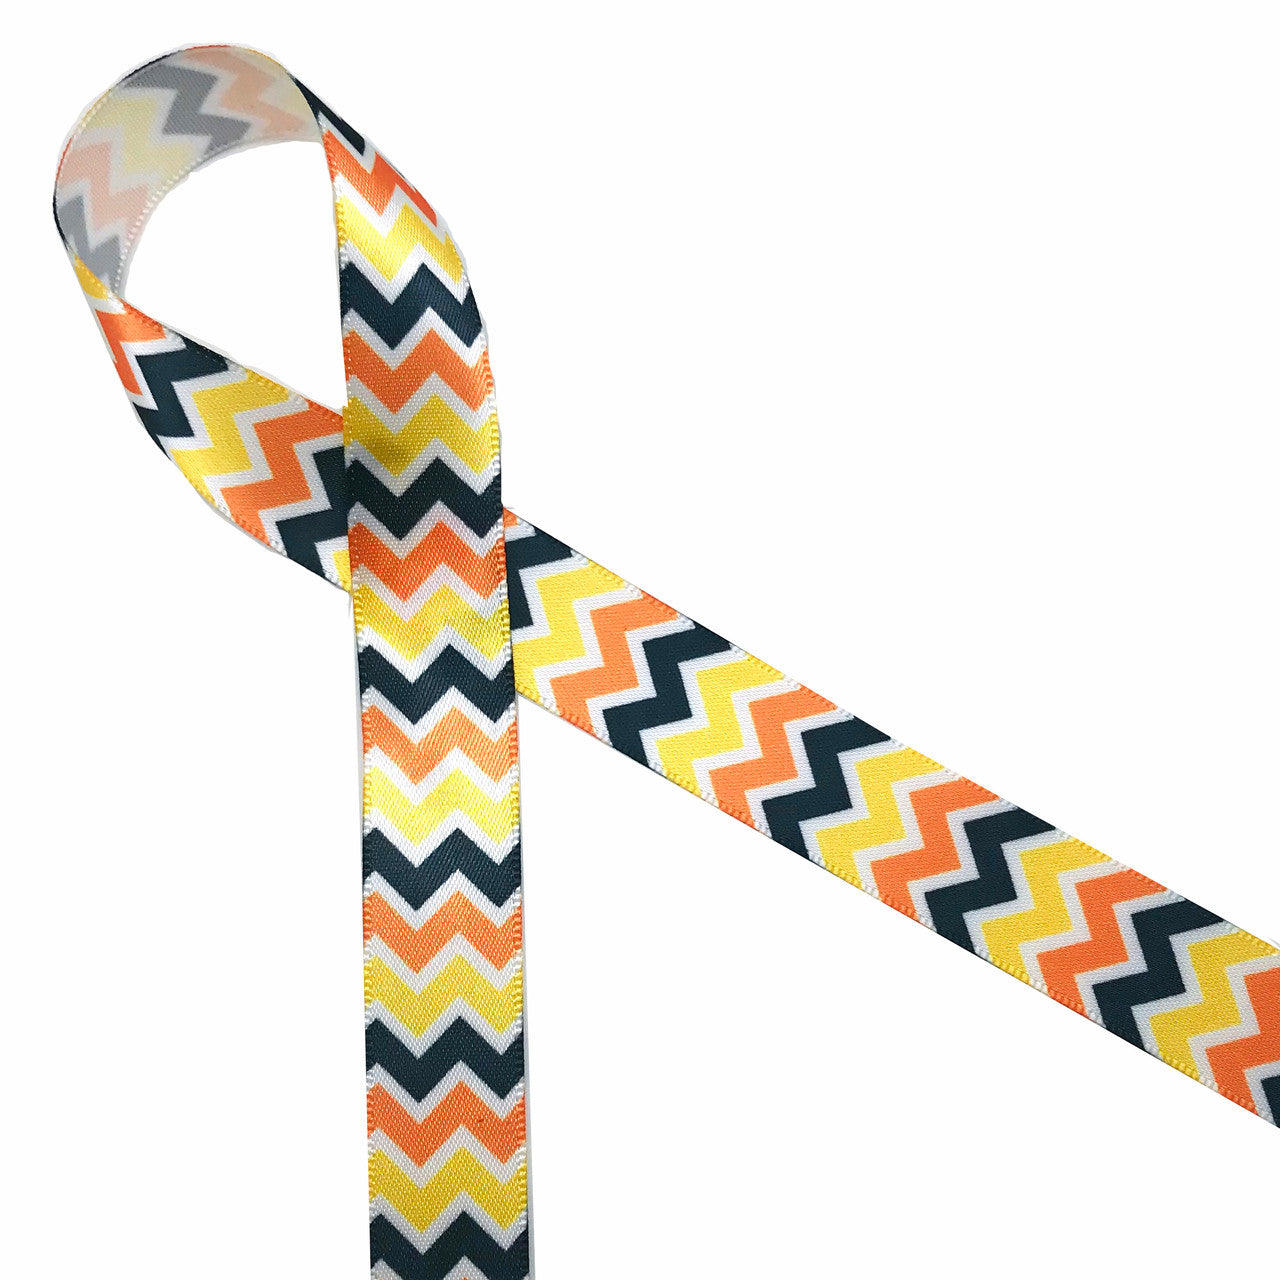 Fall Chevron ribbon in orange, black and yellow printed on 5/8" white single face satin